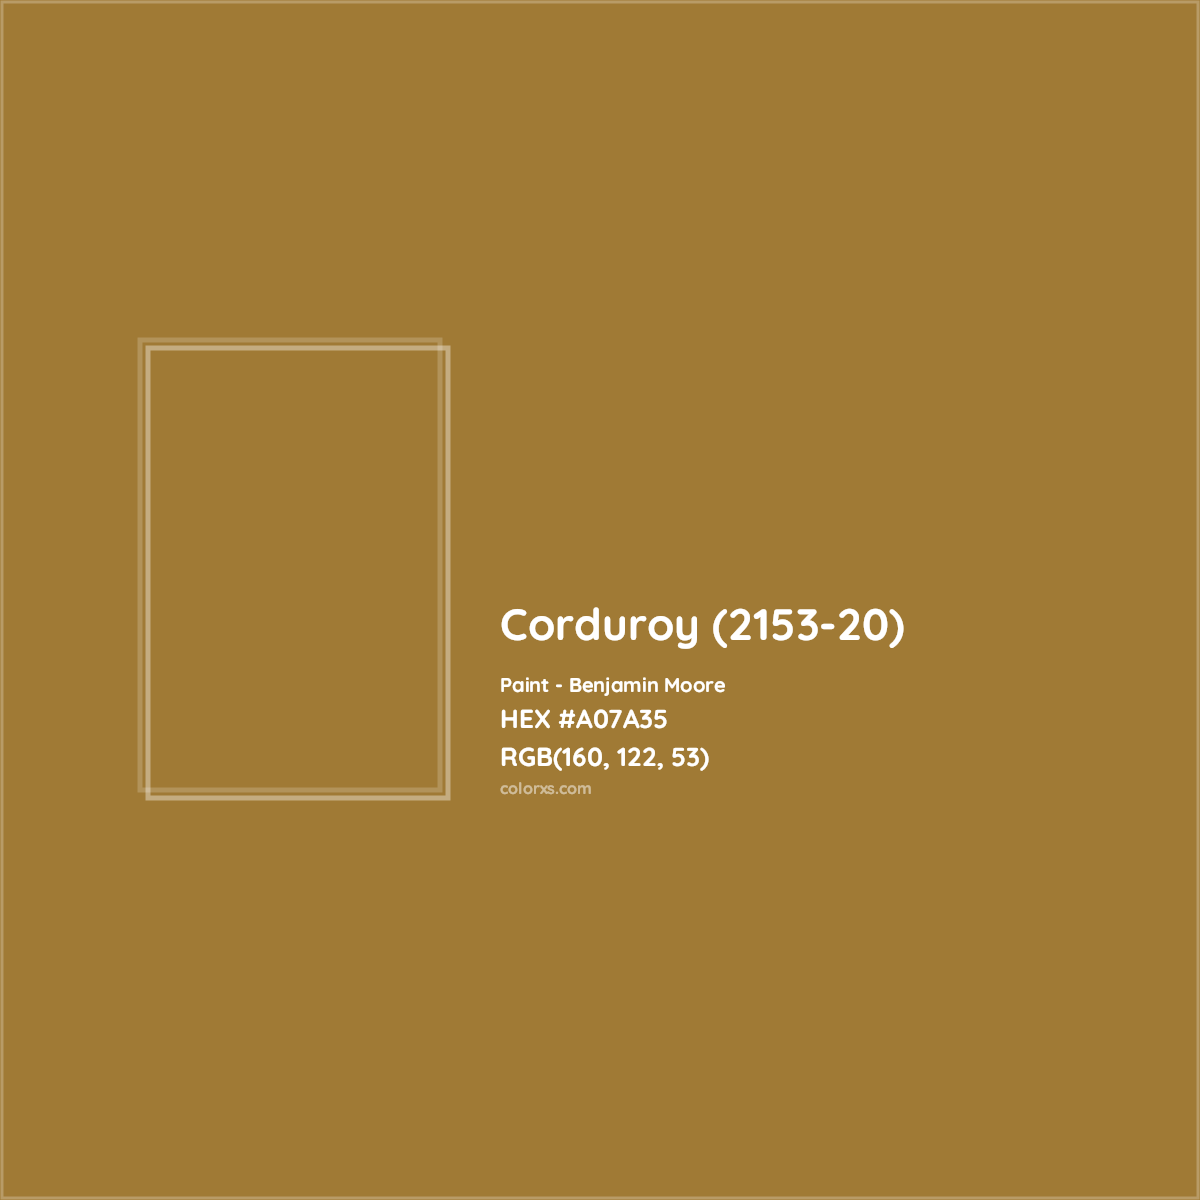 HEX #A07A35 Corduroy (2153-20) Paint Benjamin Moore - Color Code